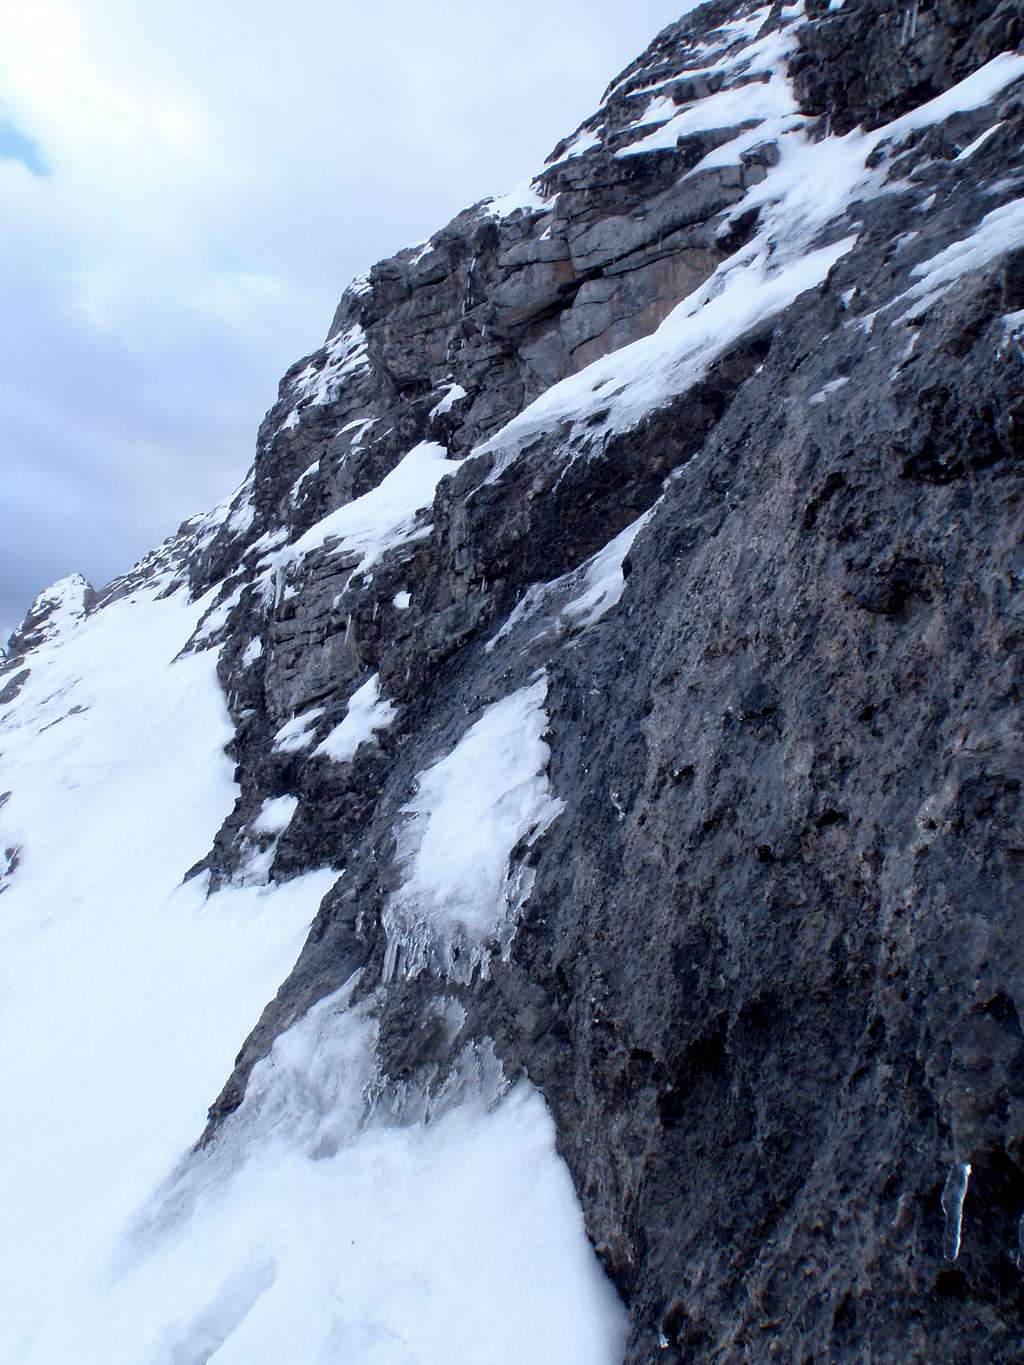 Cliffband at 2600m